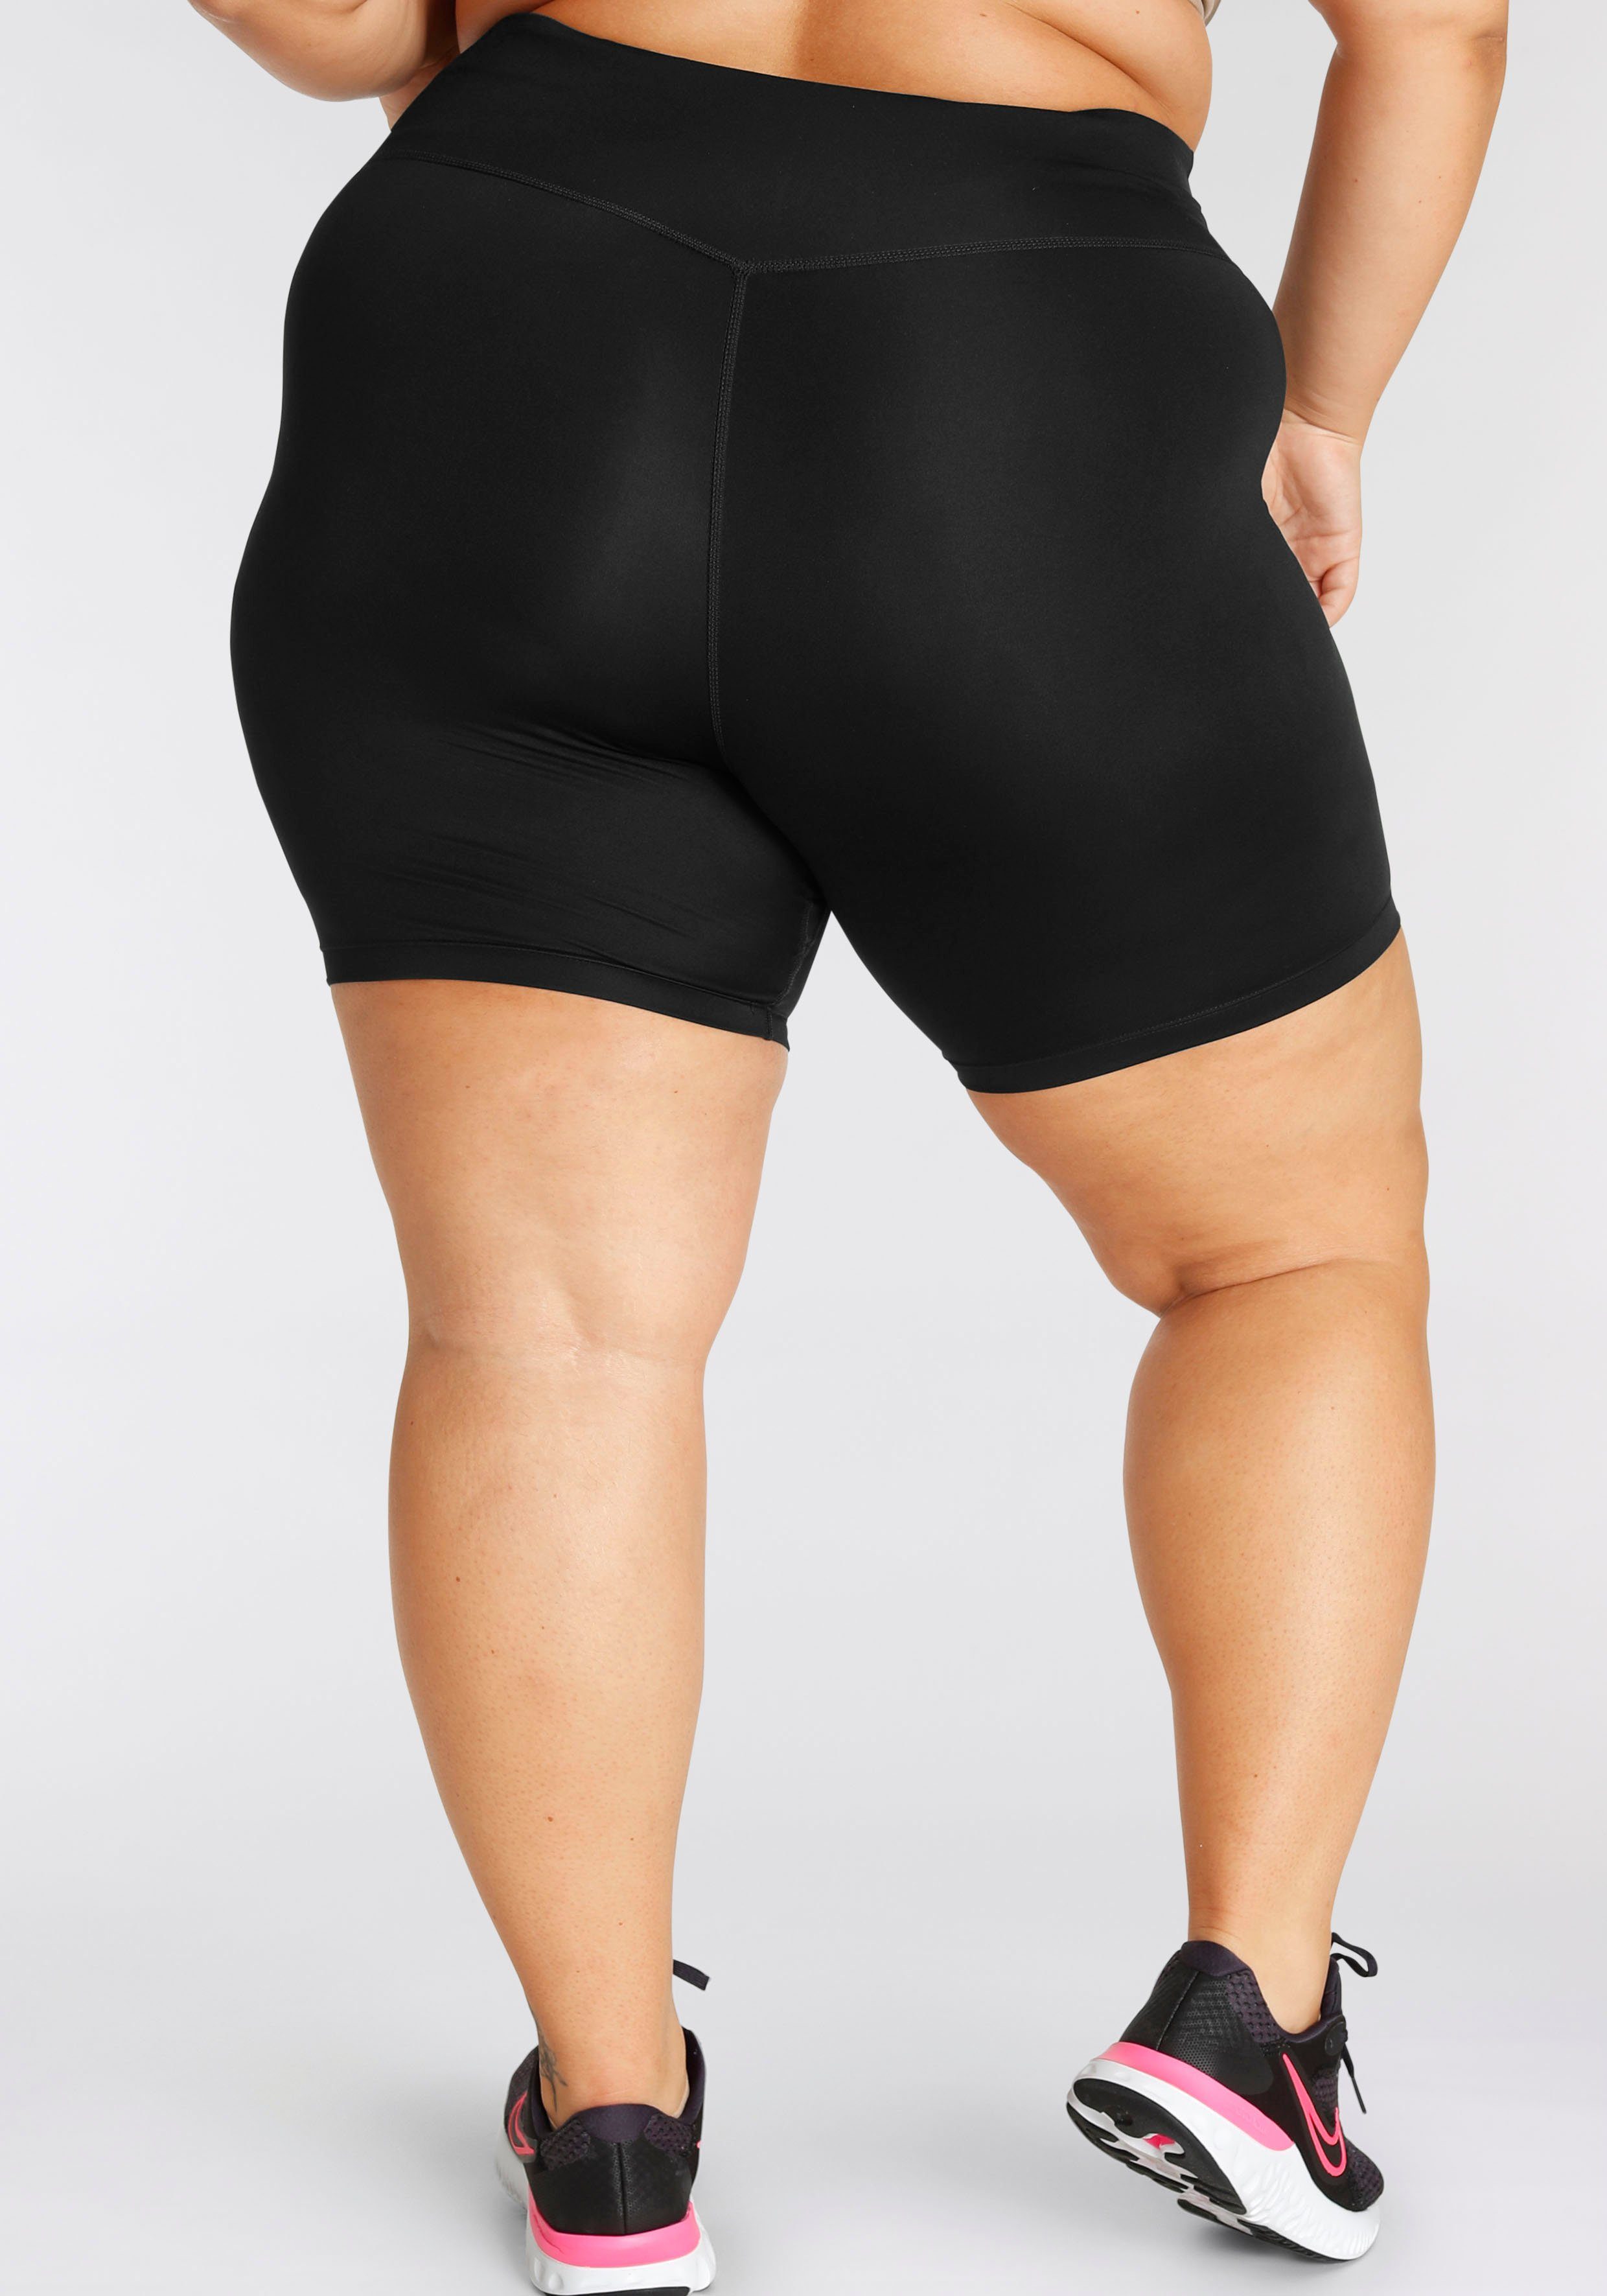 Nike Radlerhose One Shorts Mid-rise Size Women's 7" Nike Plus